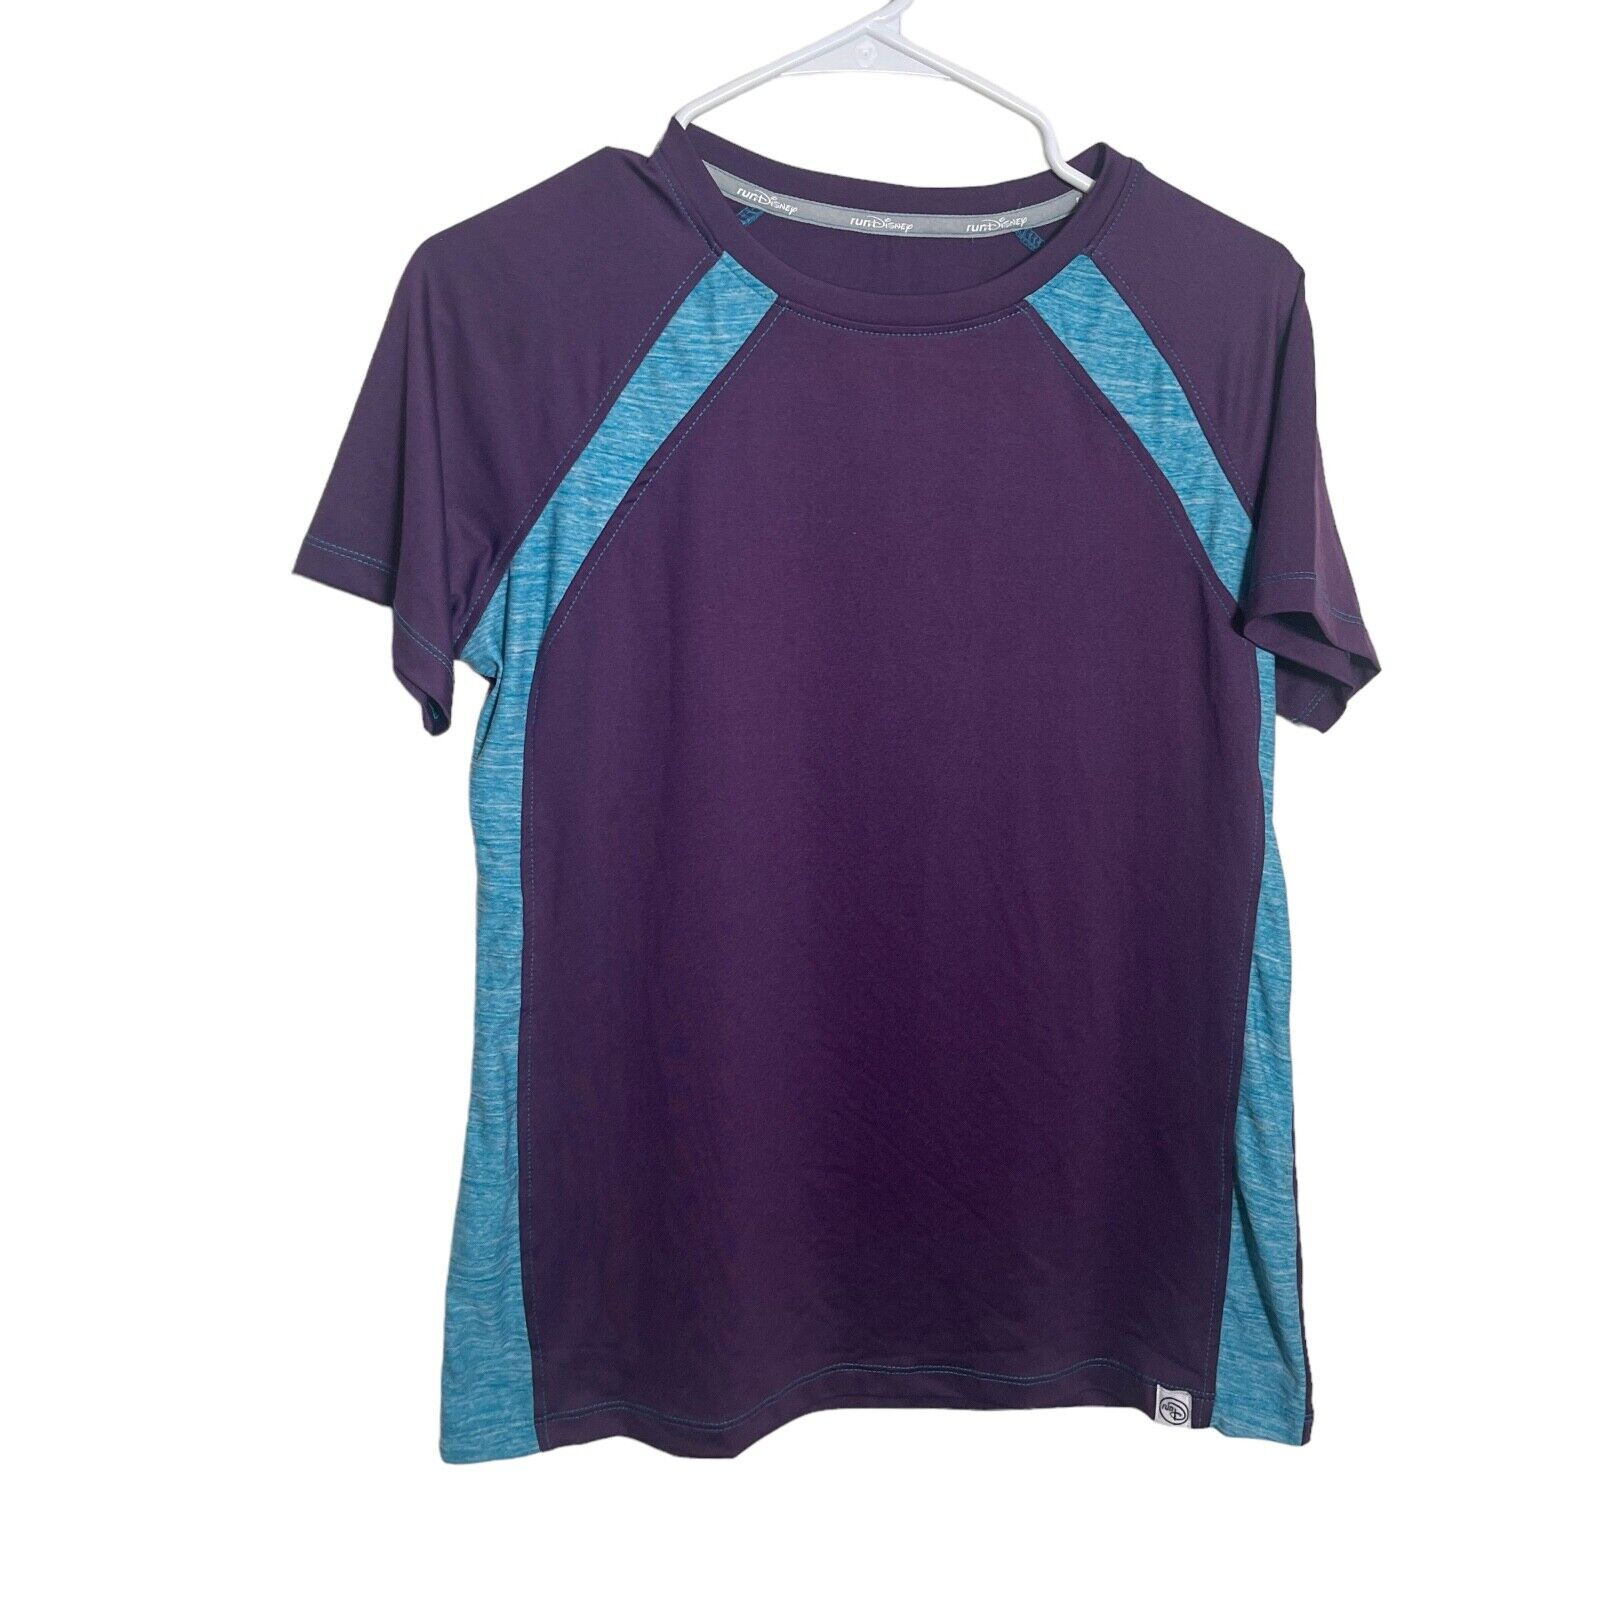 RunDisney T-Shirt Women's Small Purple Blue Short Sleeve Top Active Disney